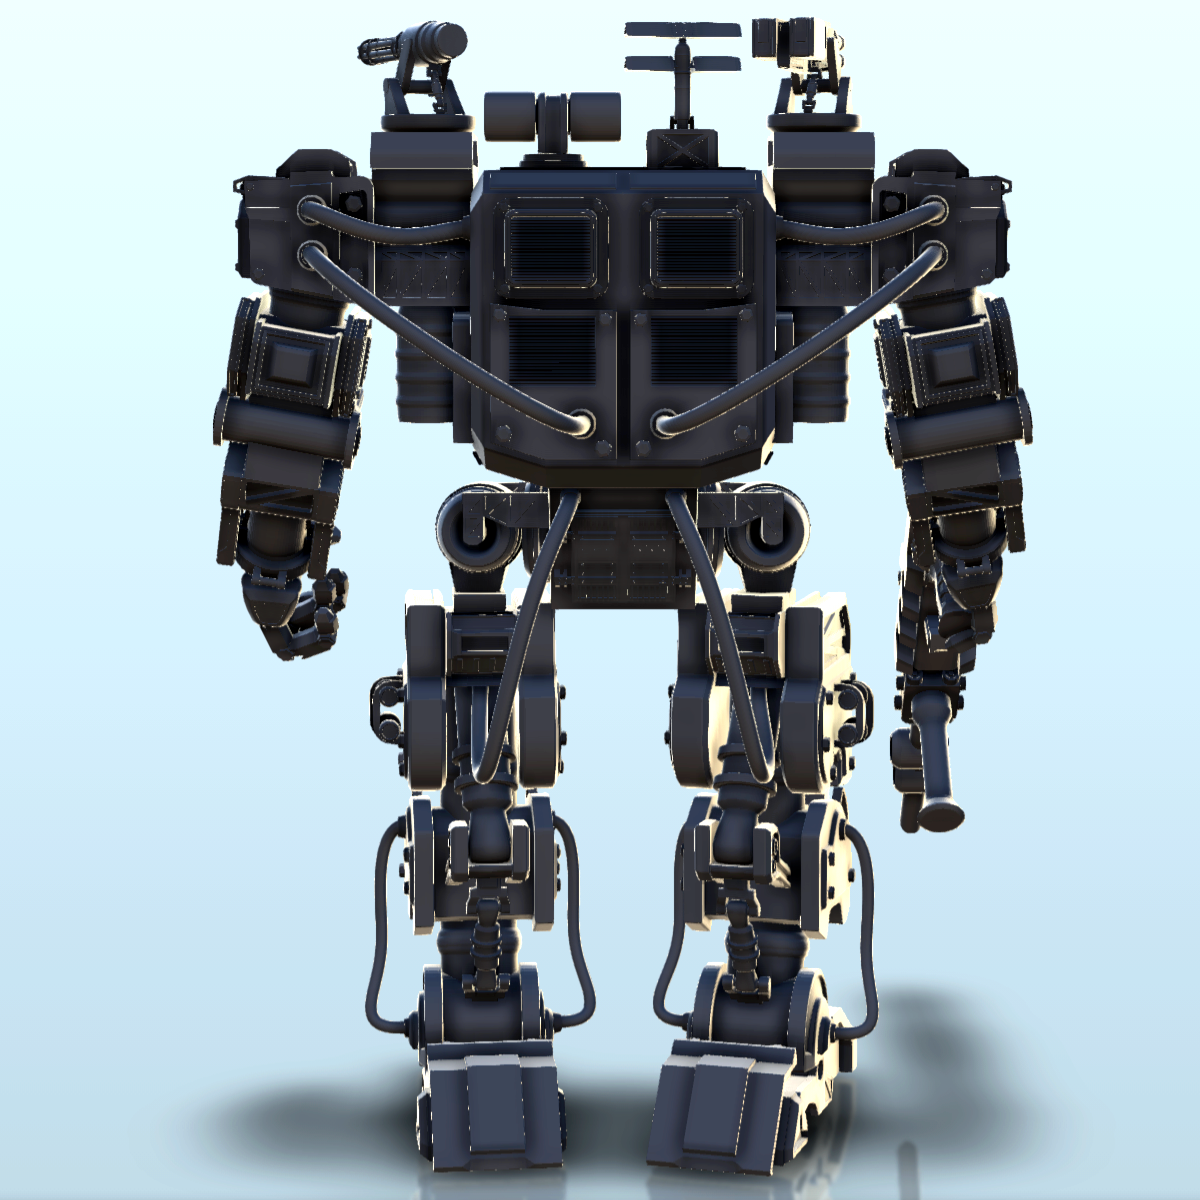 Enos combat robot (11) - sci-fi science fiction future 40k b